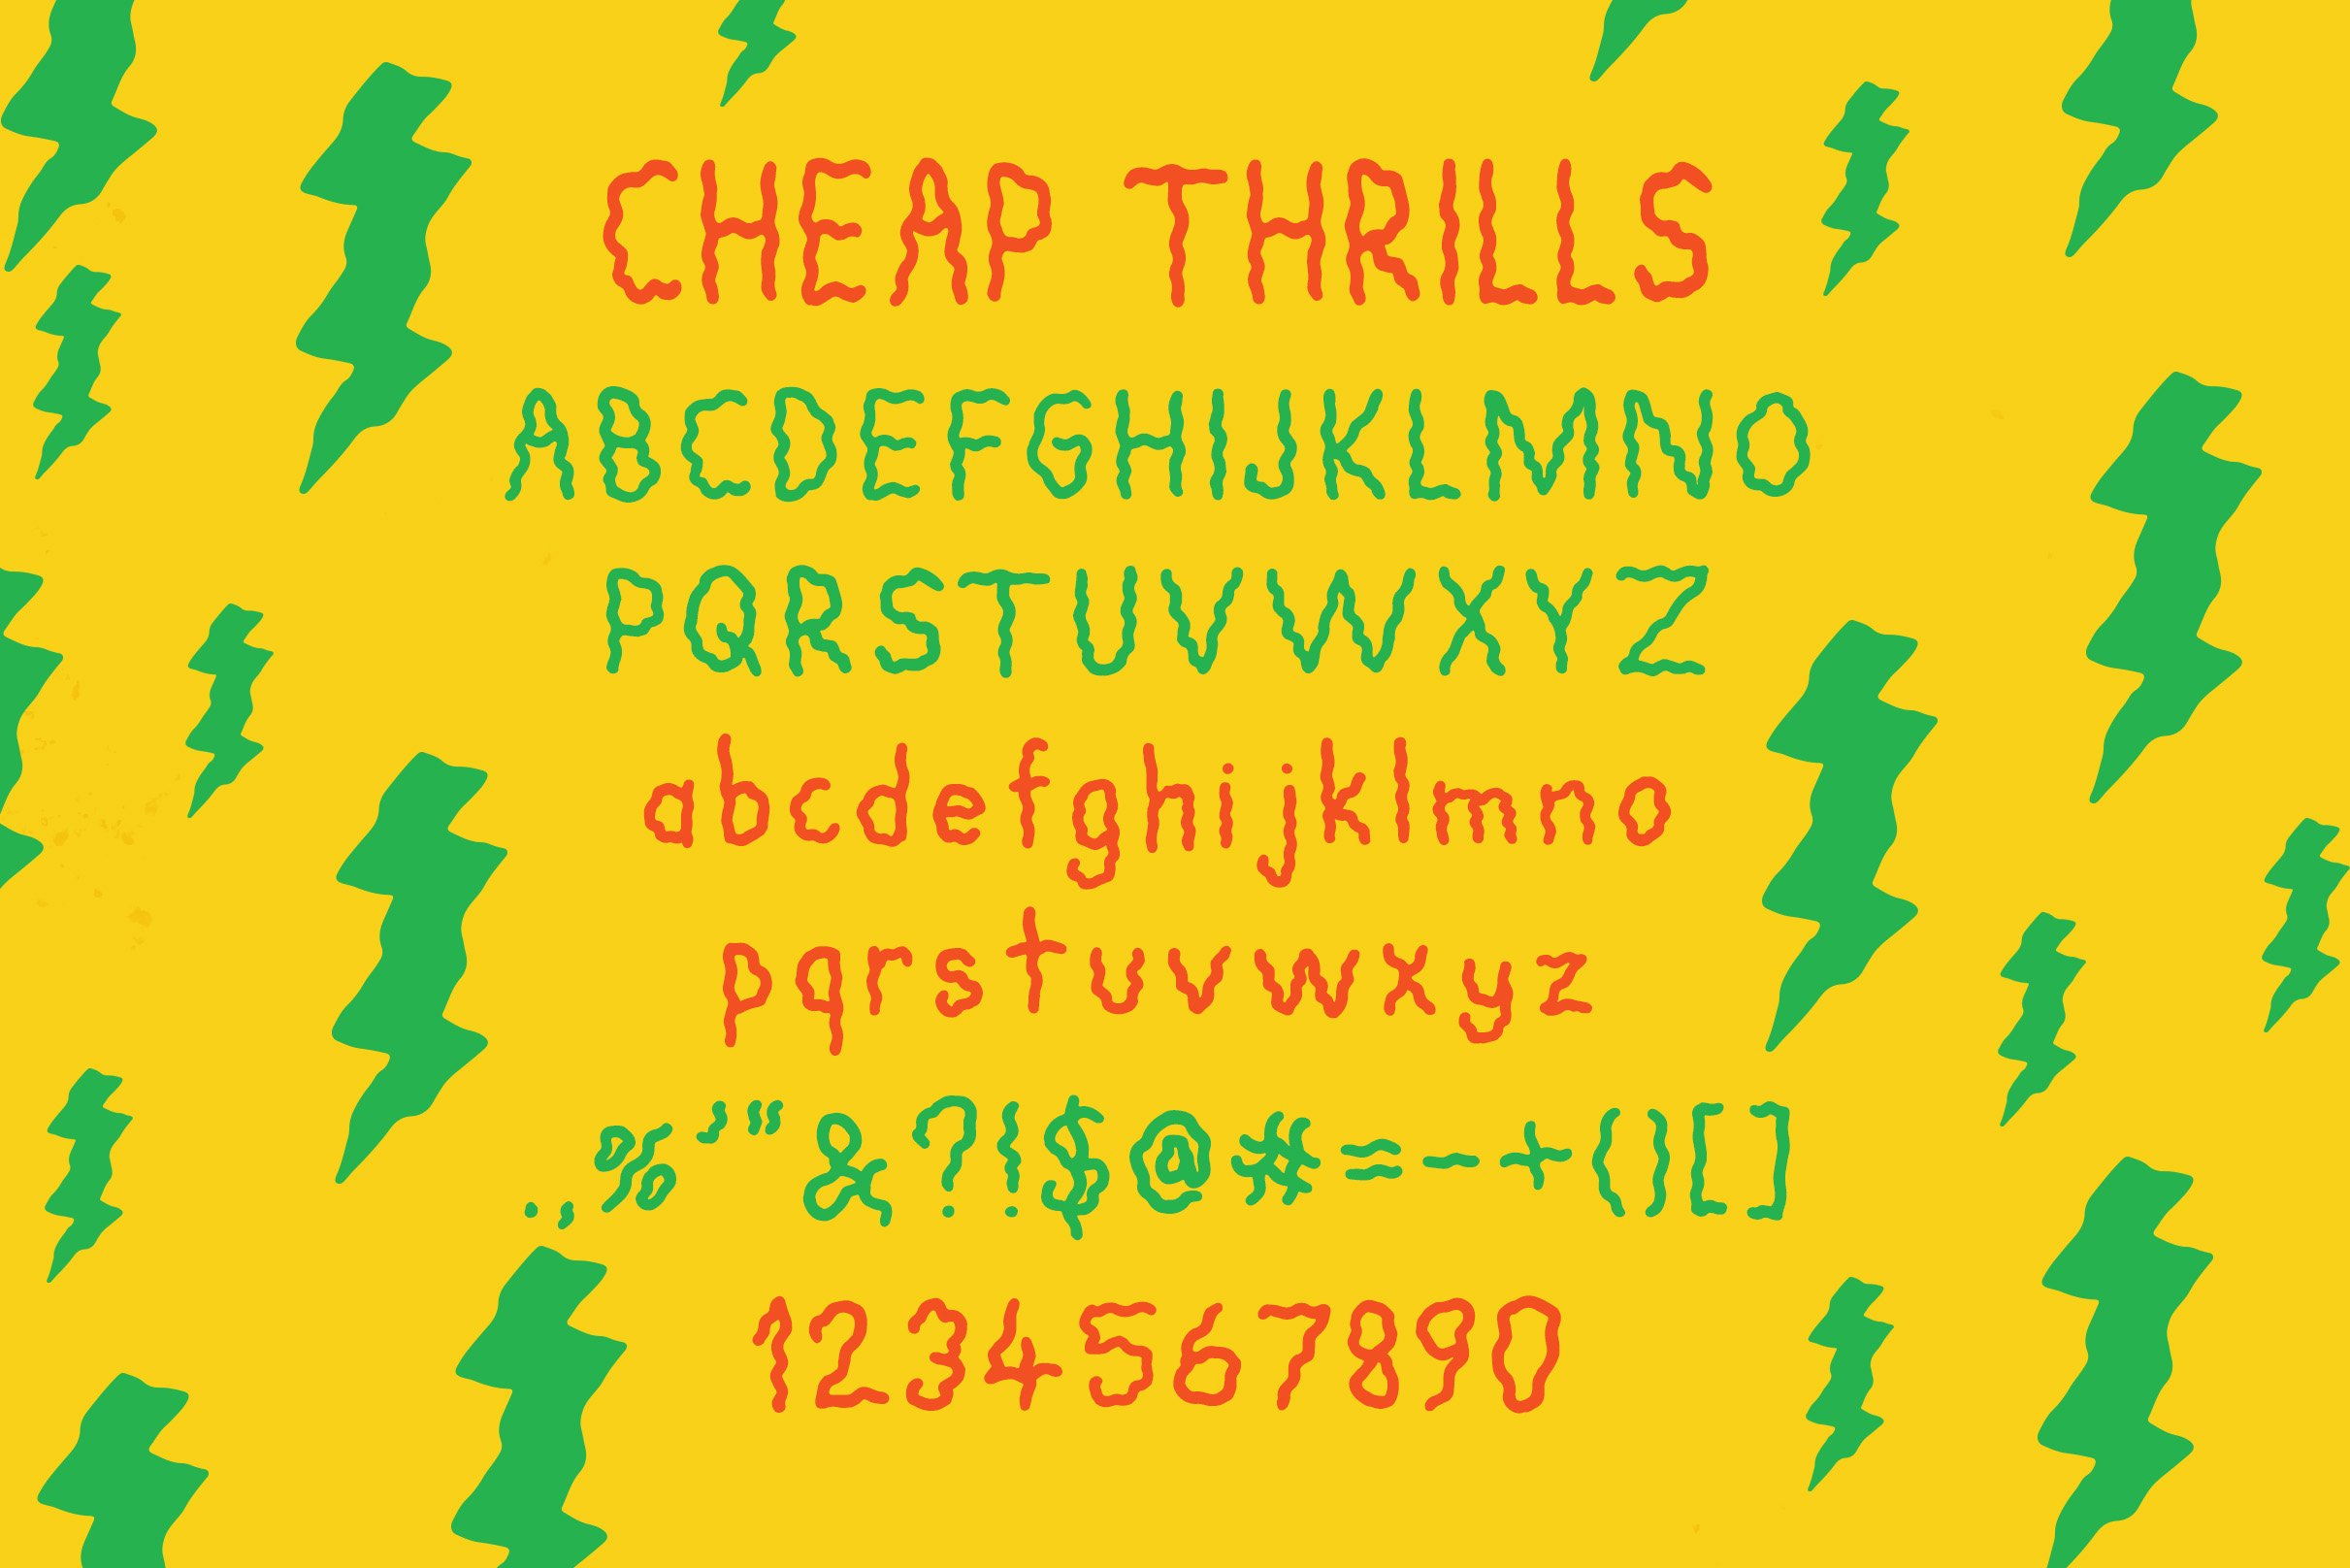 cheapthrills 1bx 457